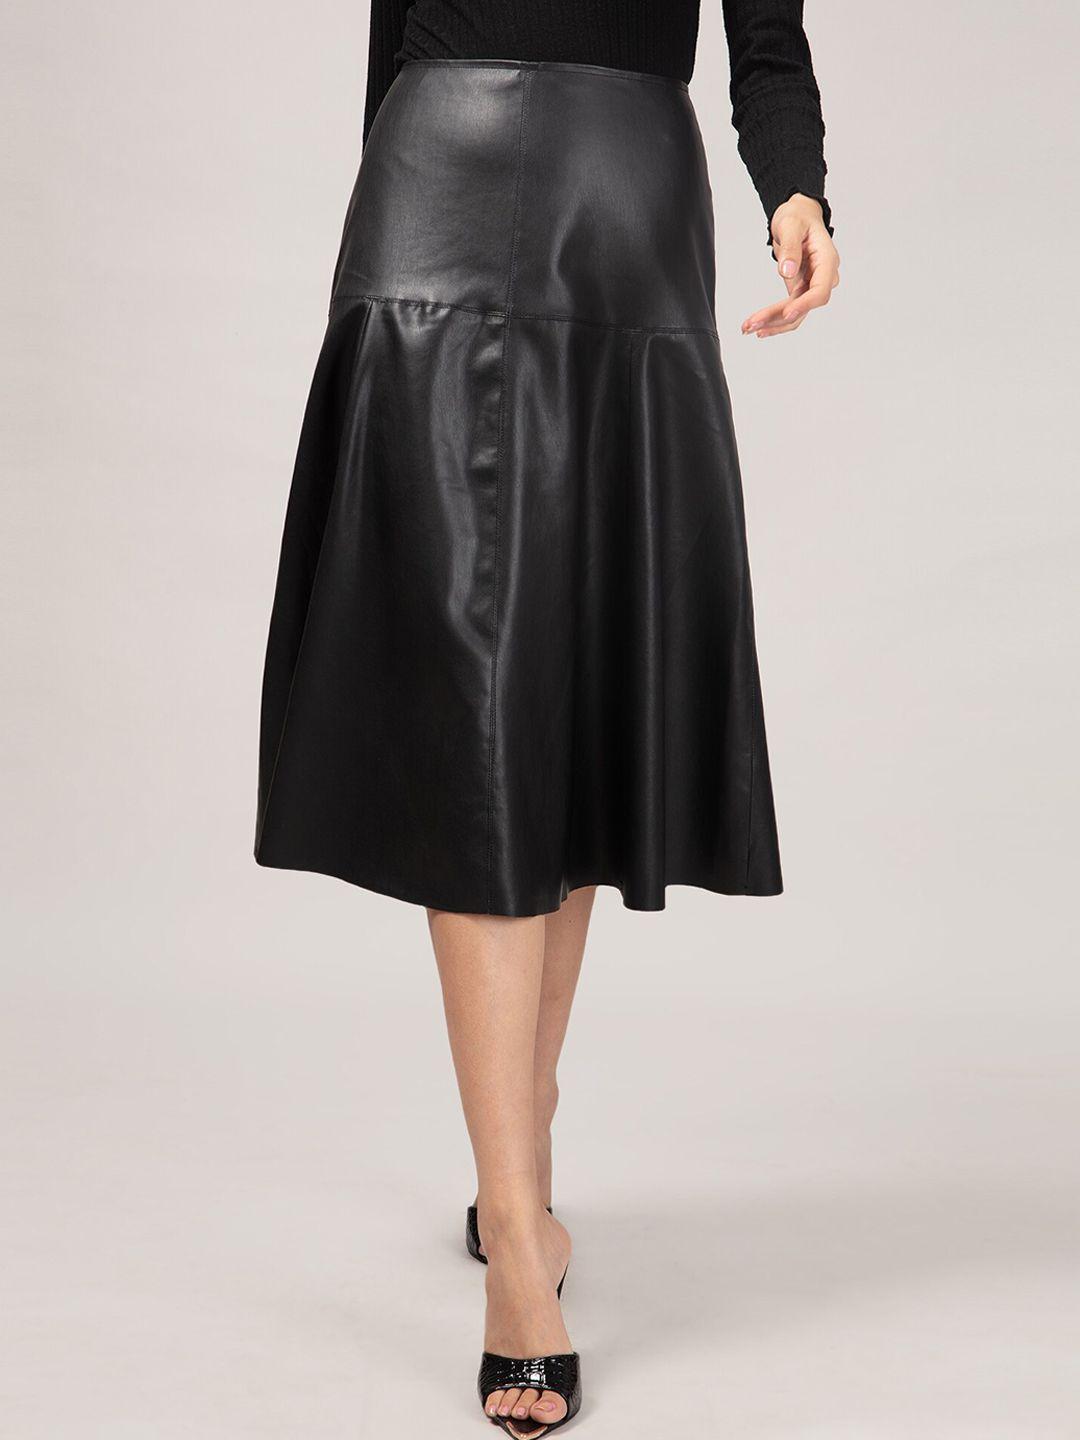 20dresses women black solid flare faux leather midi skirt